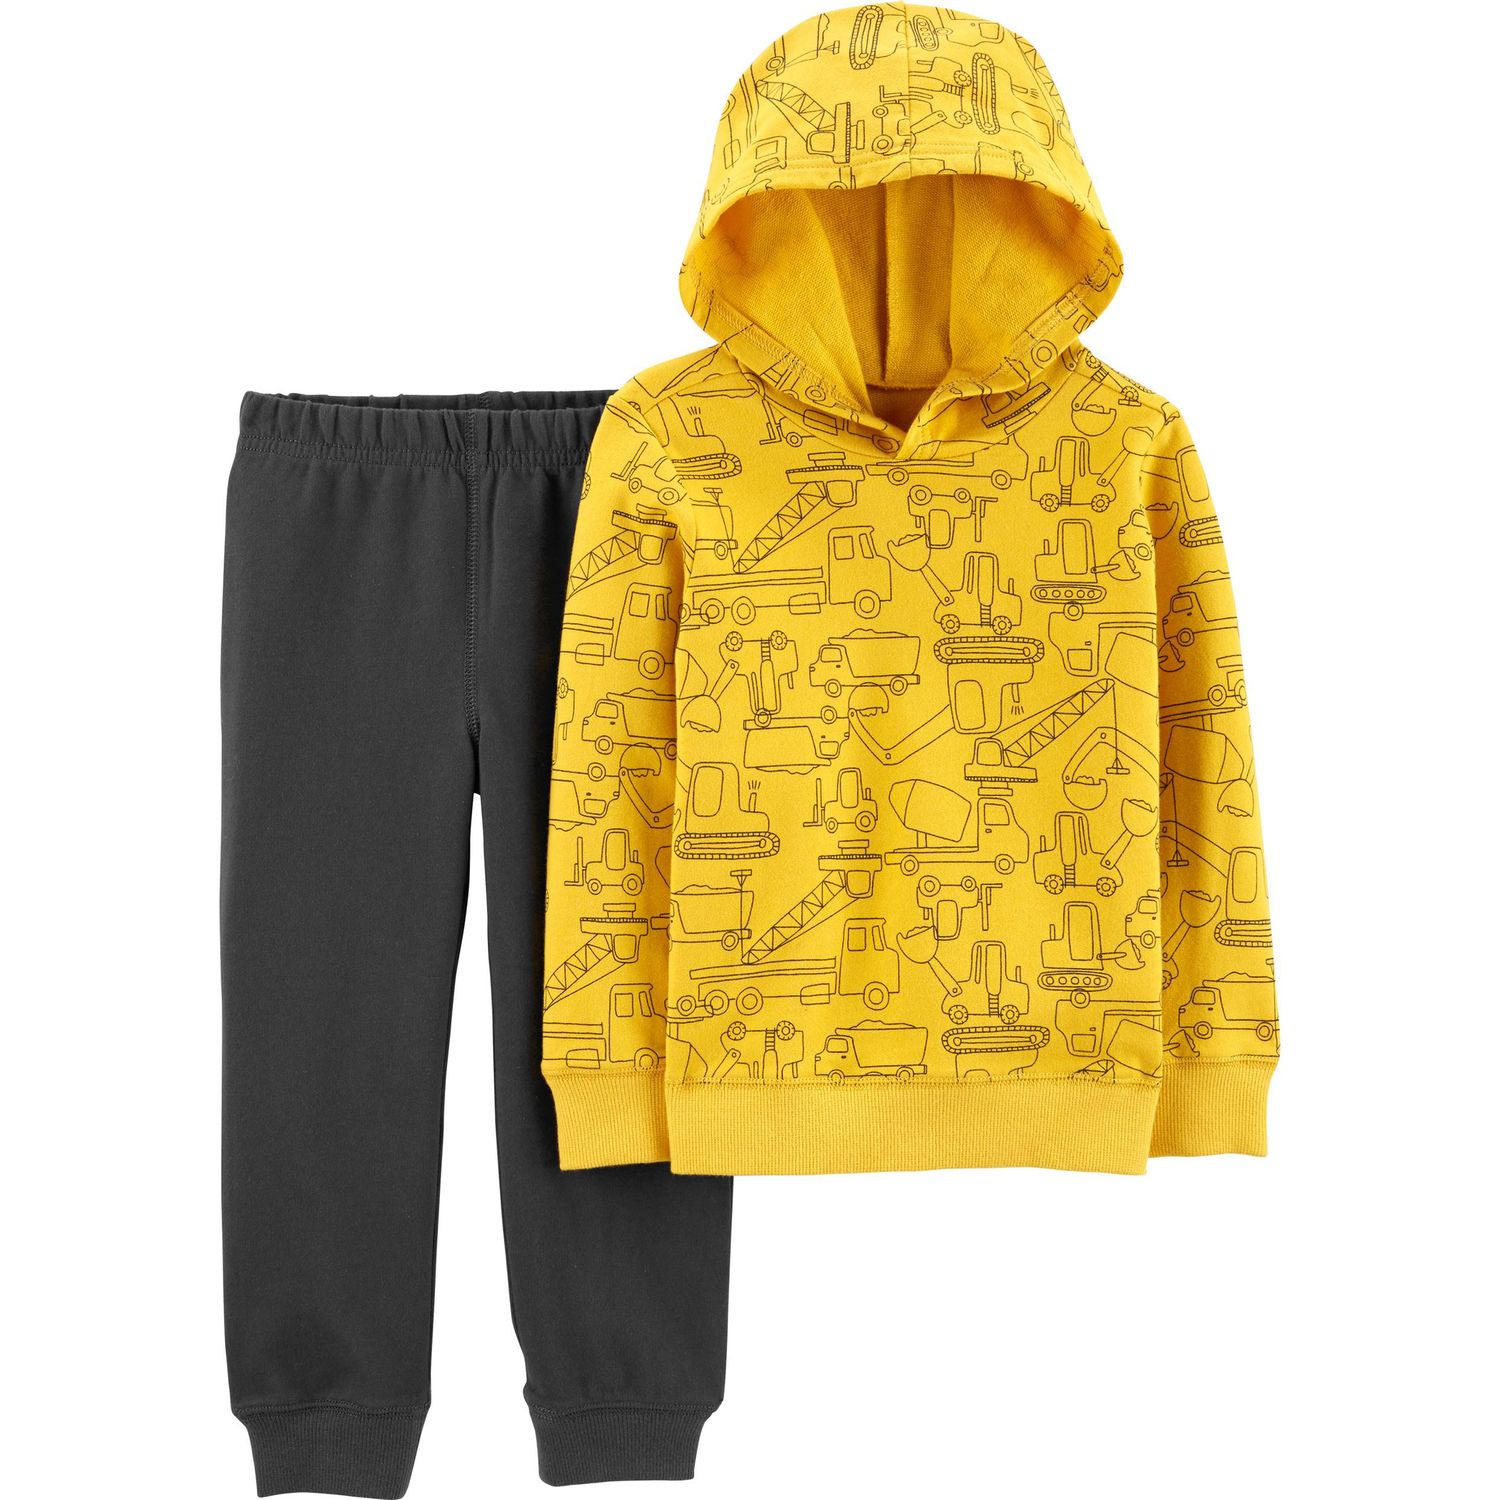 toddler yellow hoodie